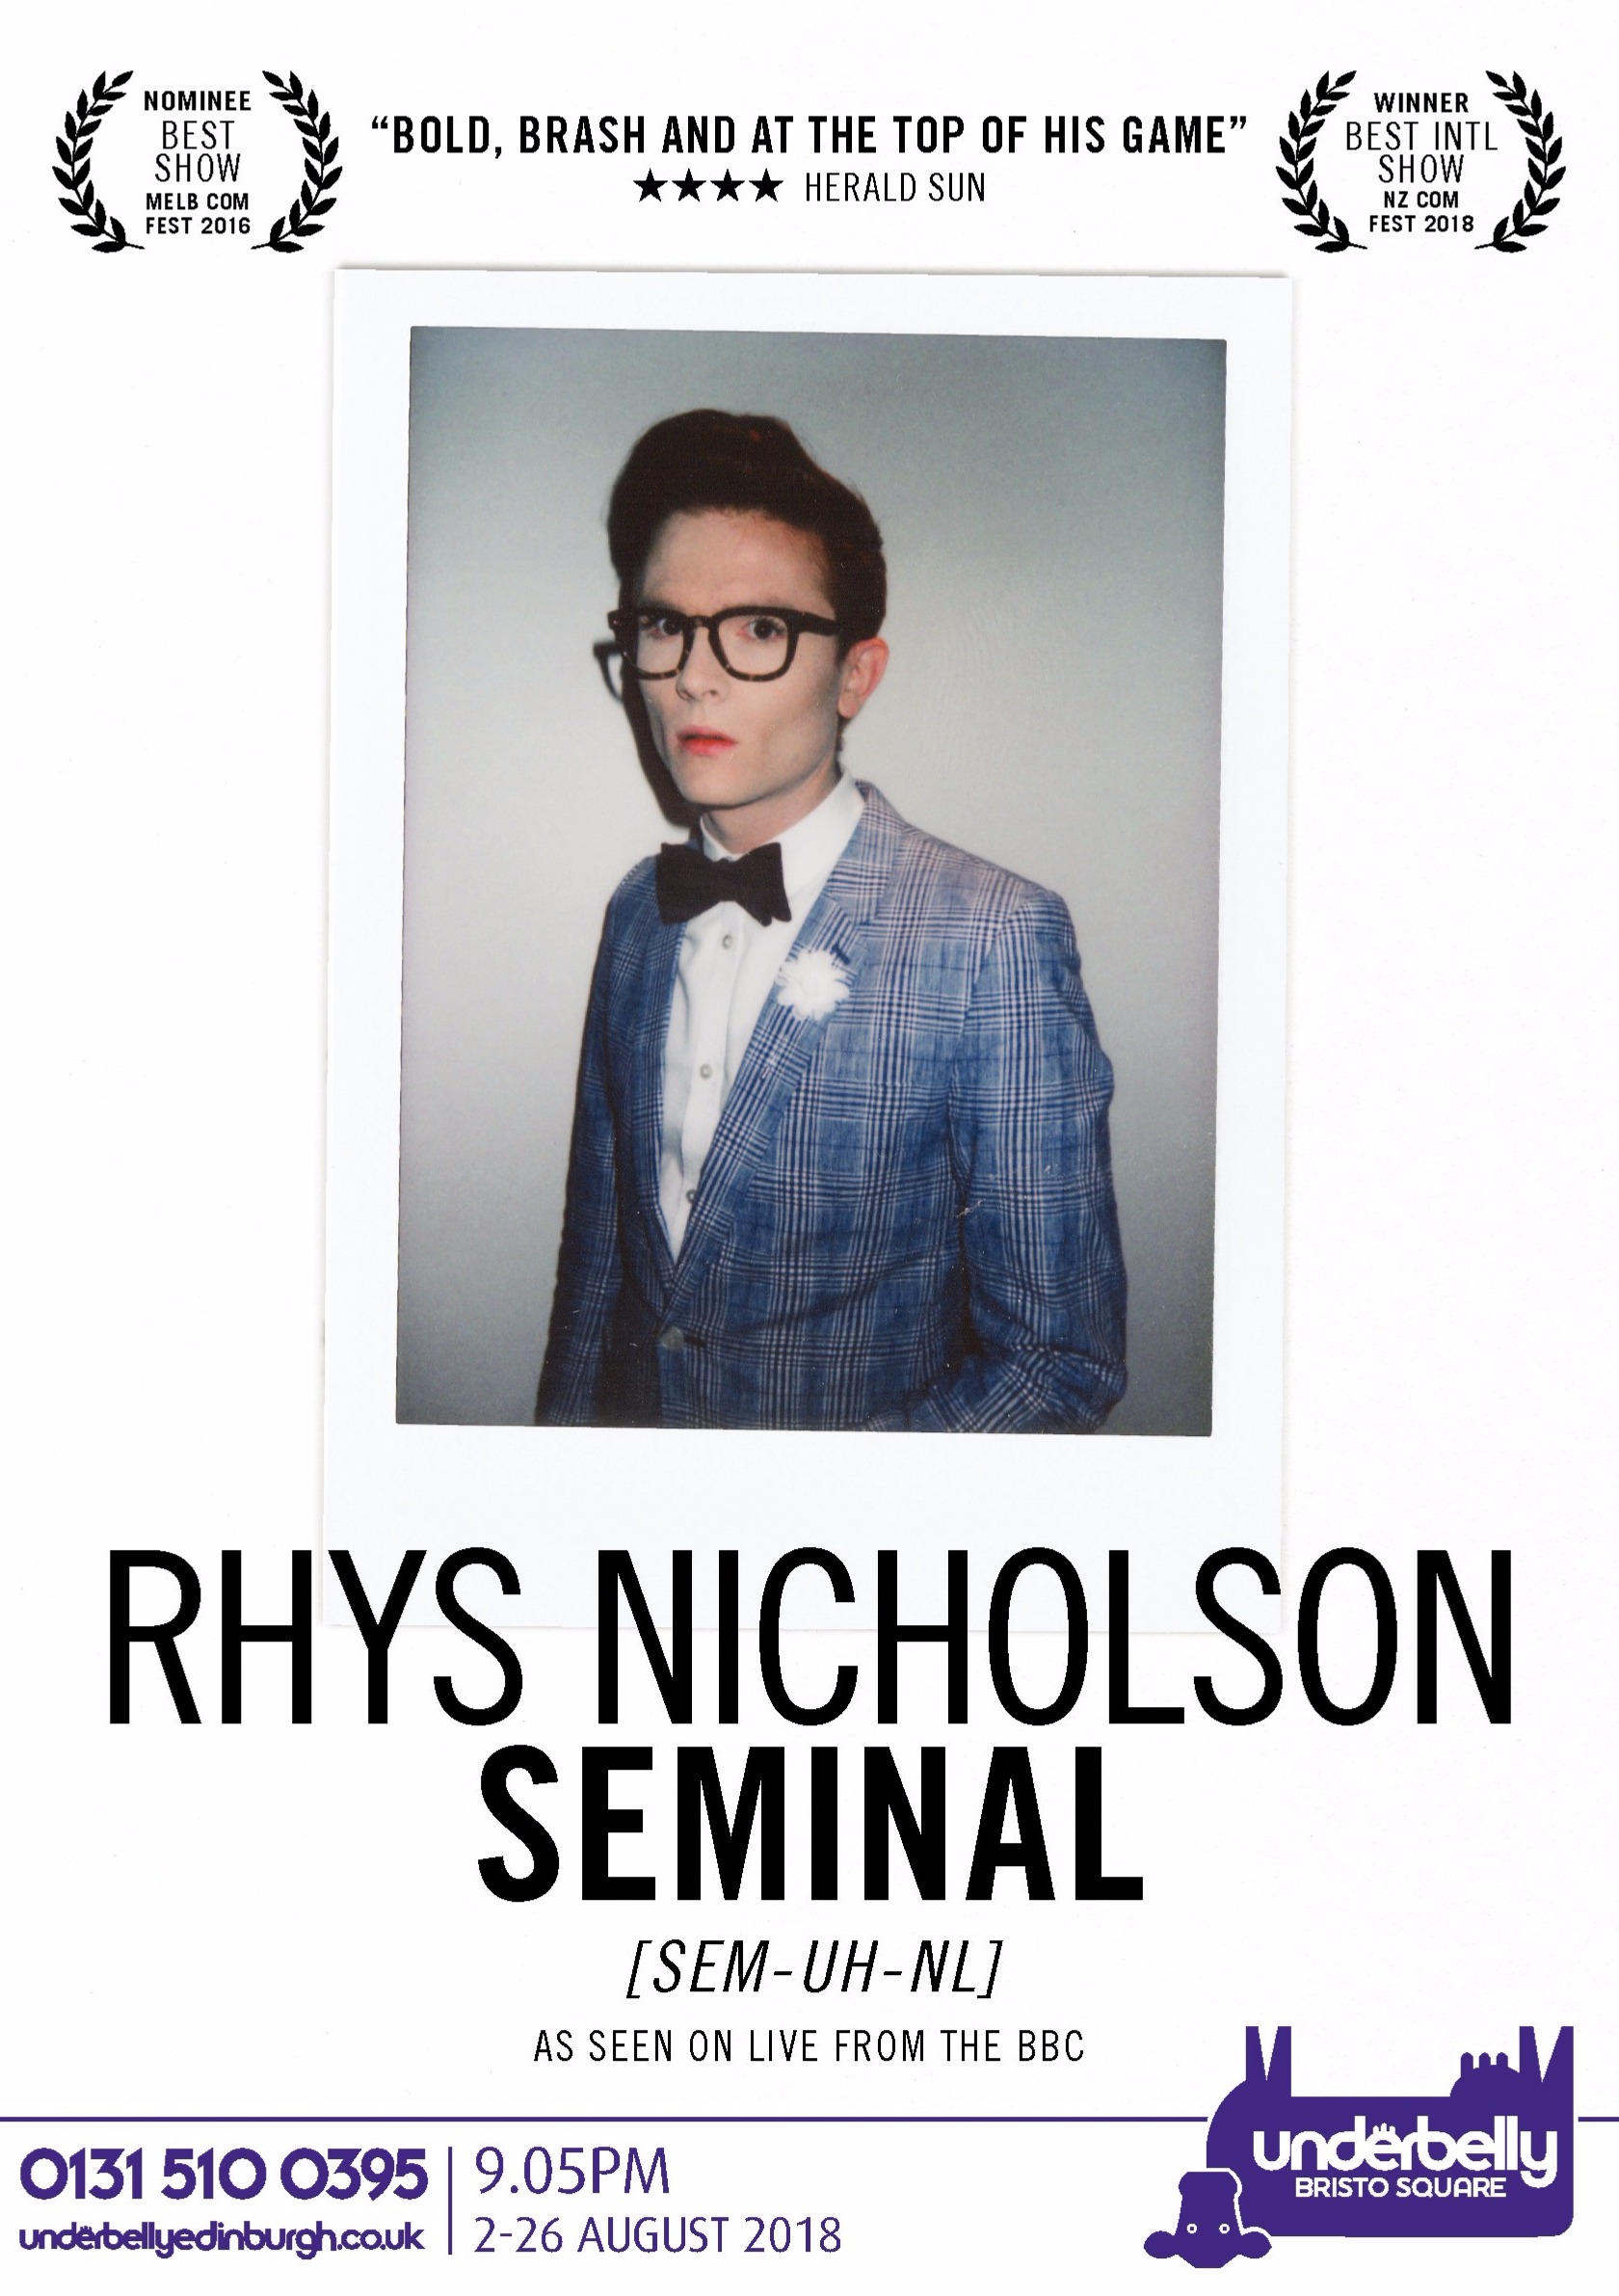 The poster for Rhys Nicholson - Seminal